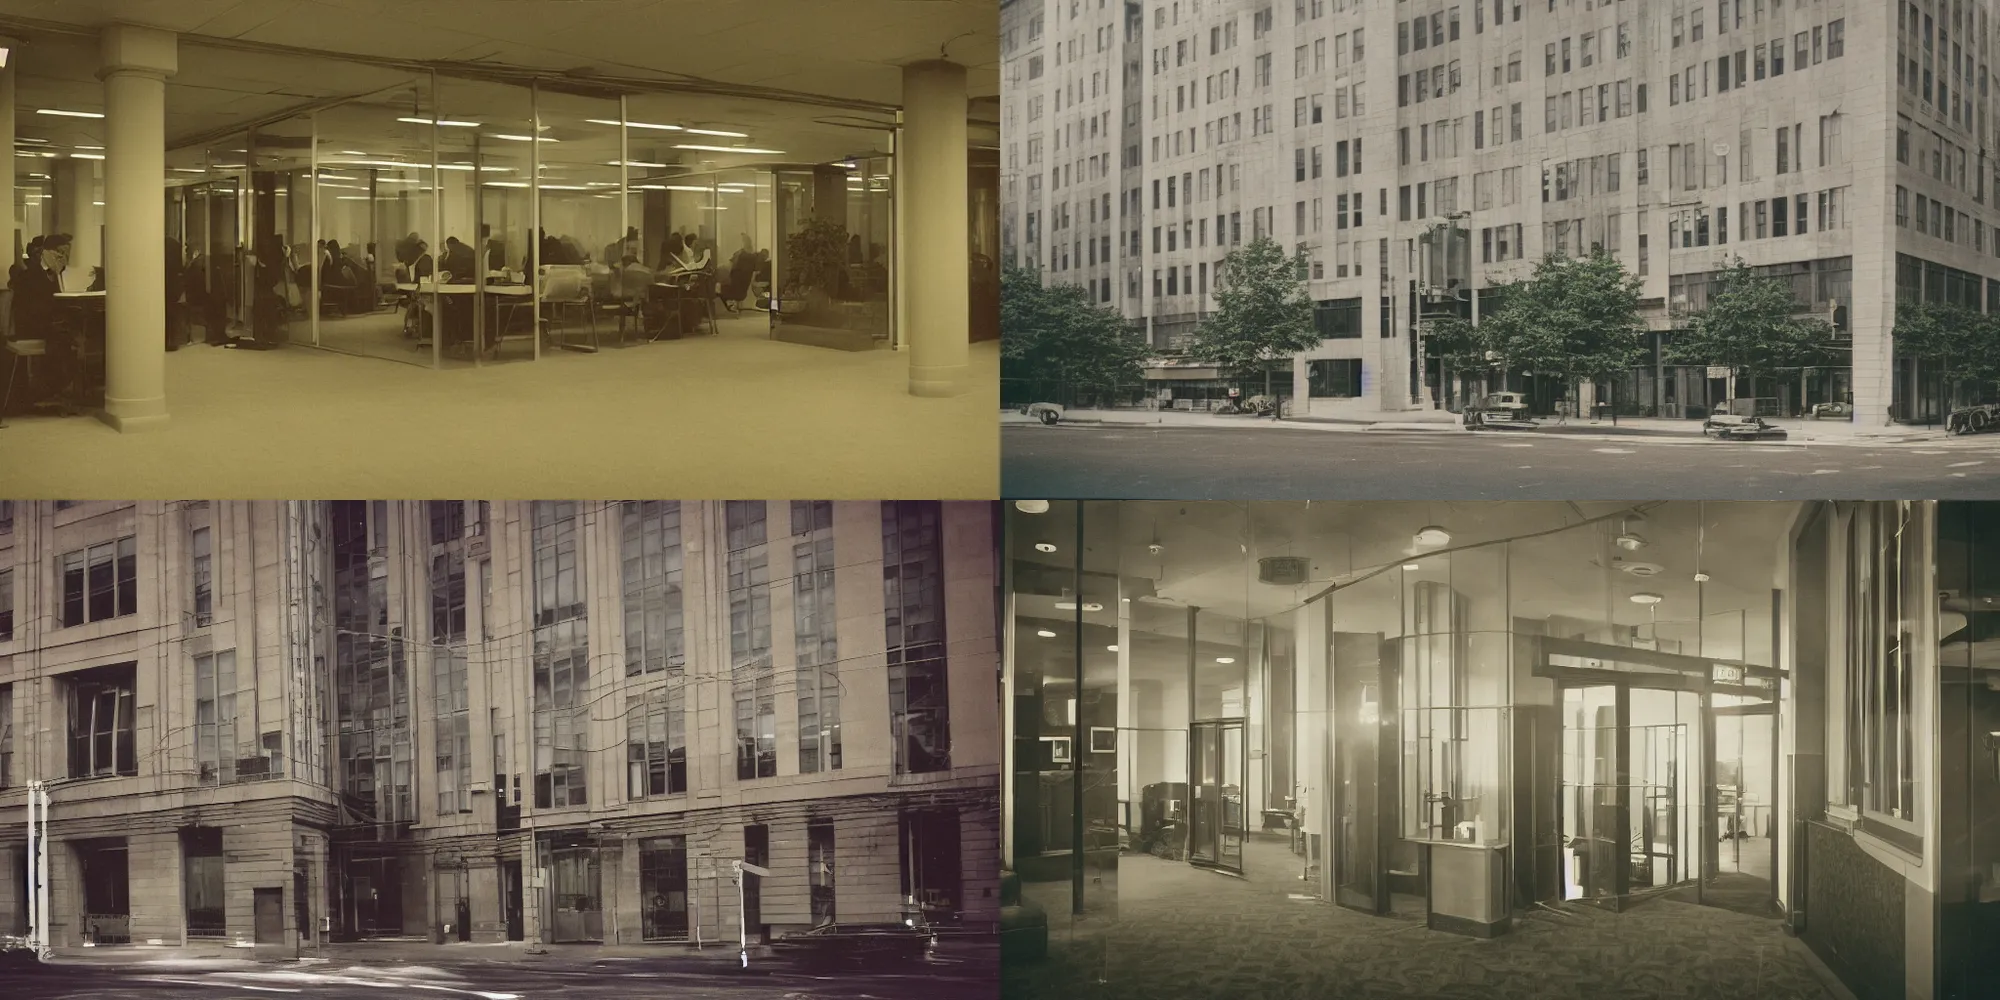 Prompt: 1920s office building, cinestill 800t 50mm eastmancolor, liminal space